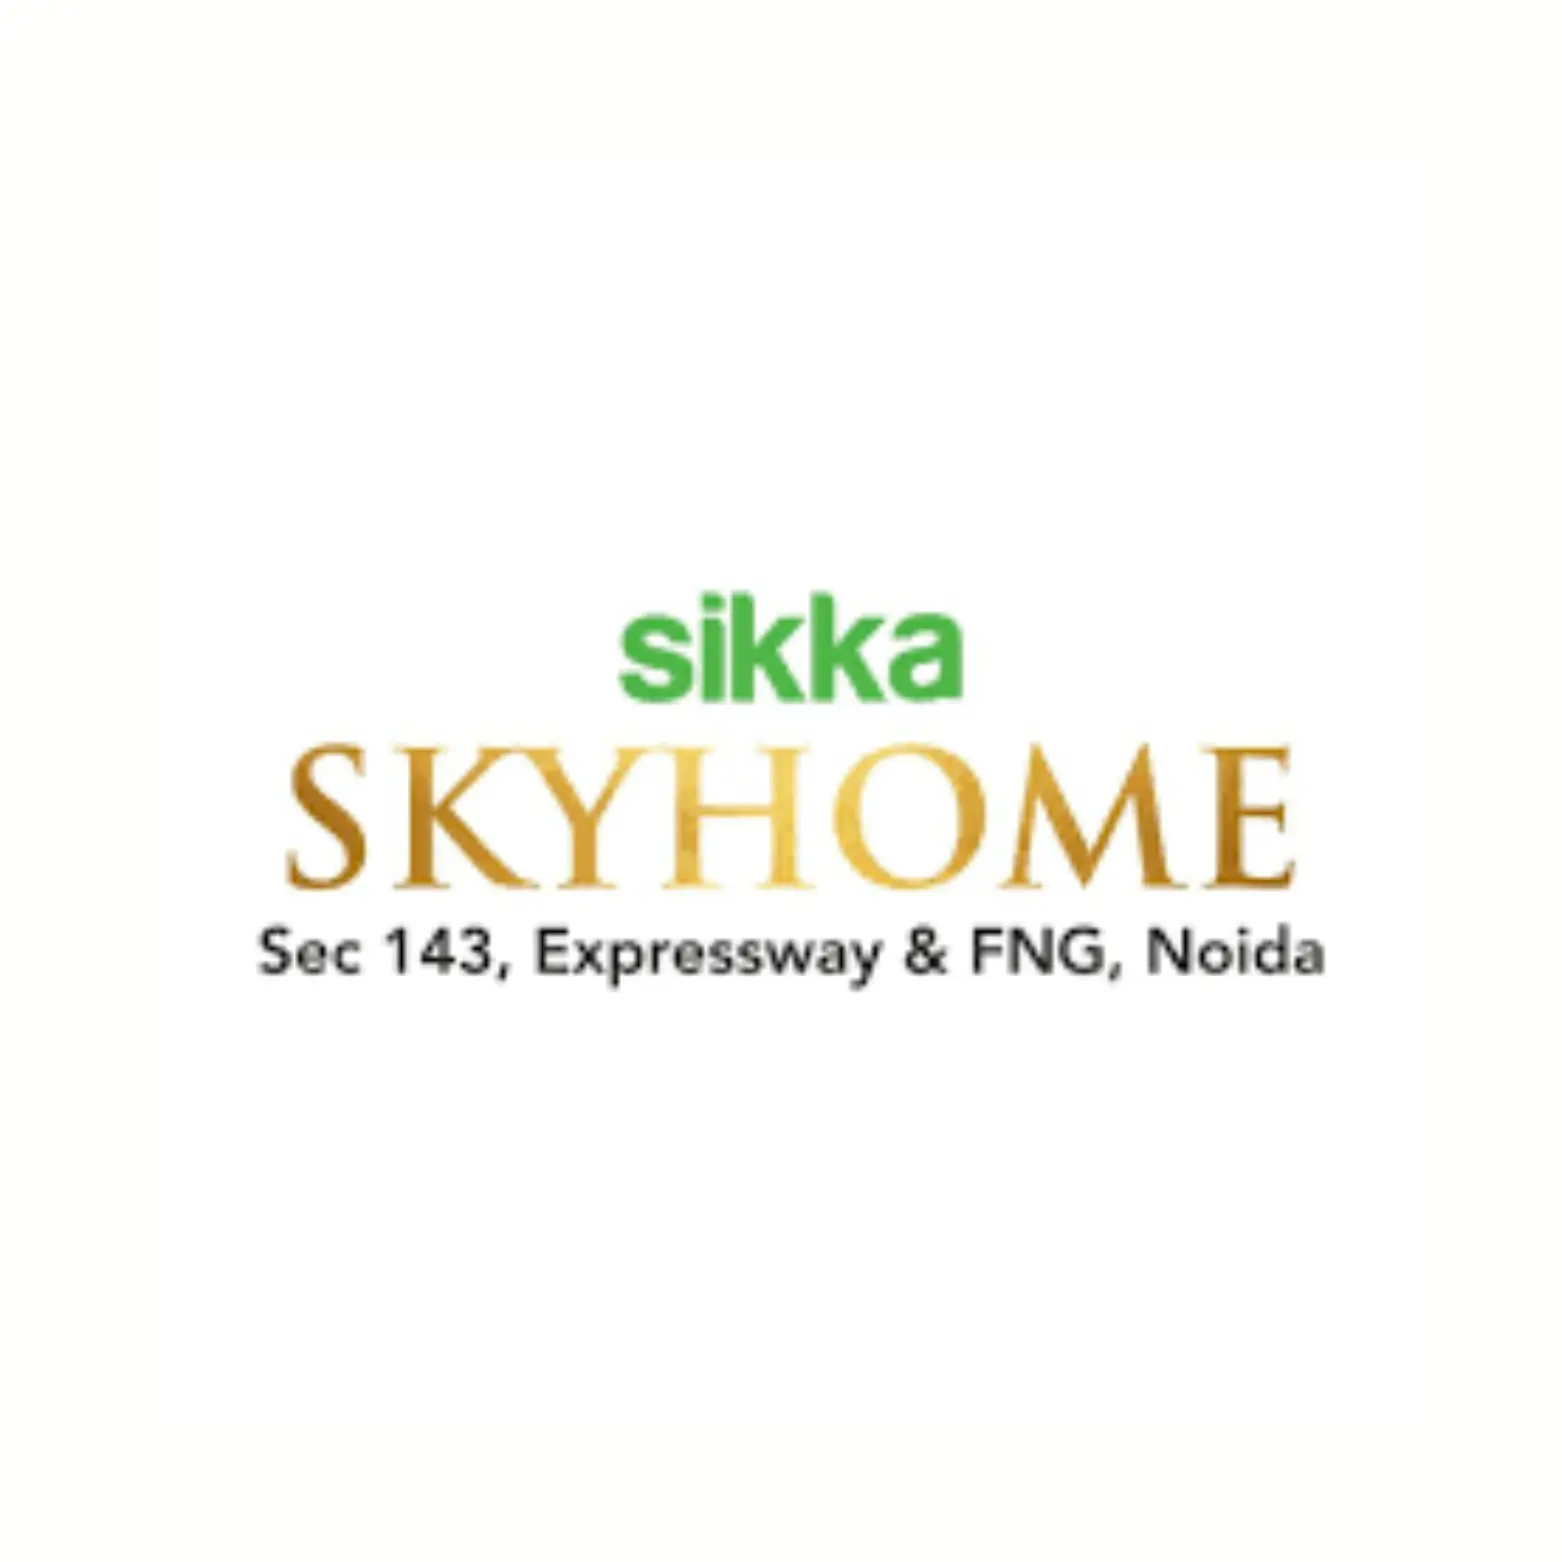 Sikka Sky Homes